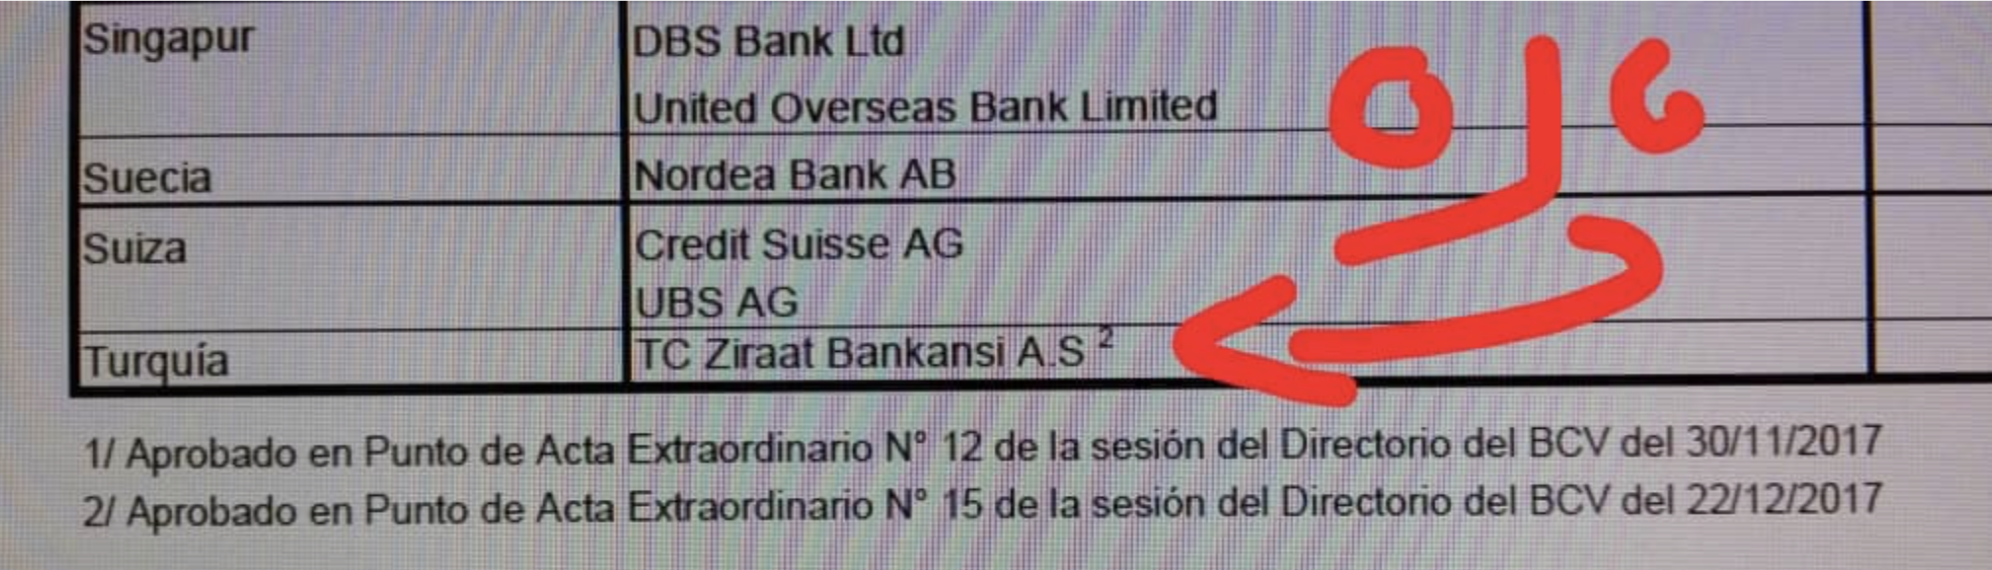 Venezuela's Central Bank chose Turkey's TC Ziraat Bankansi AS for international reserves operations.